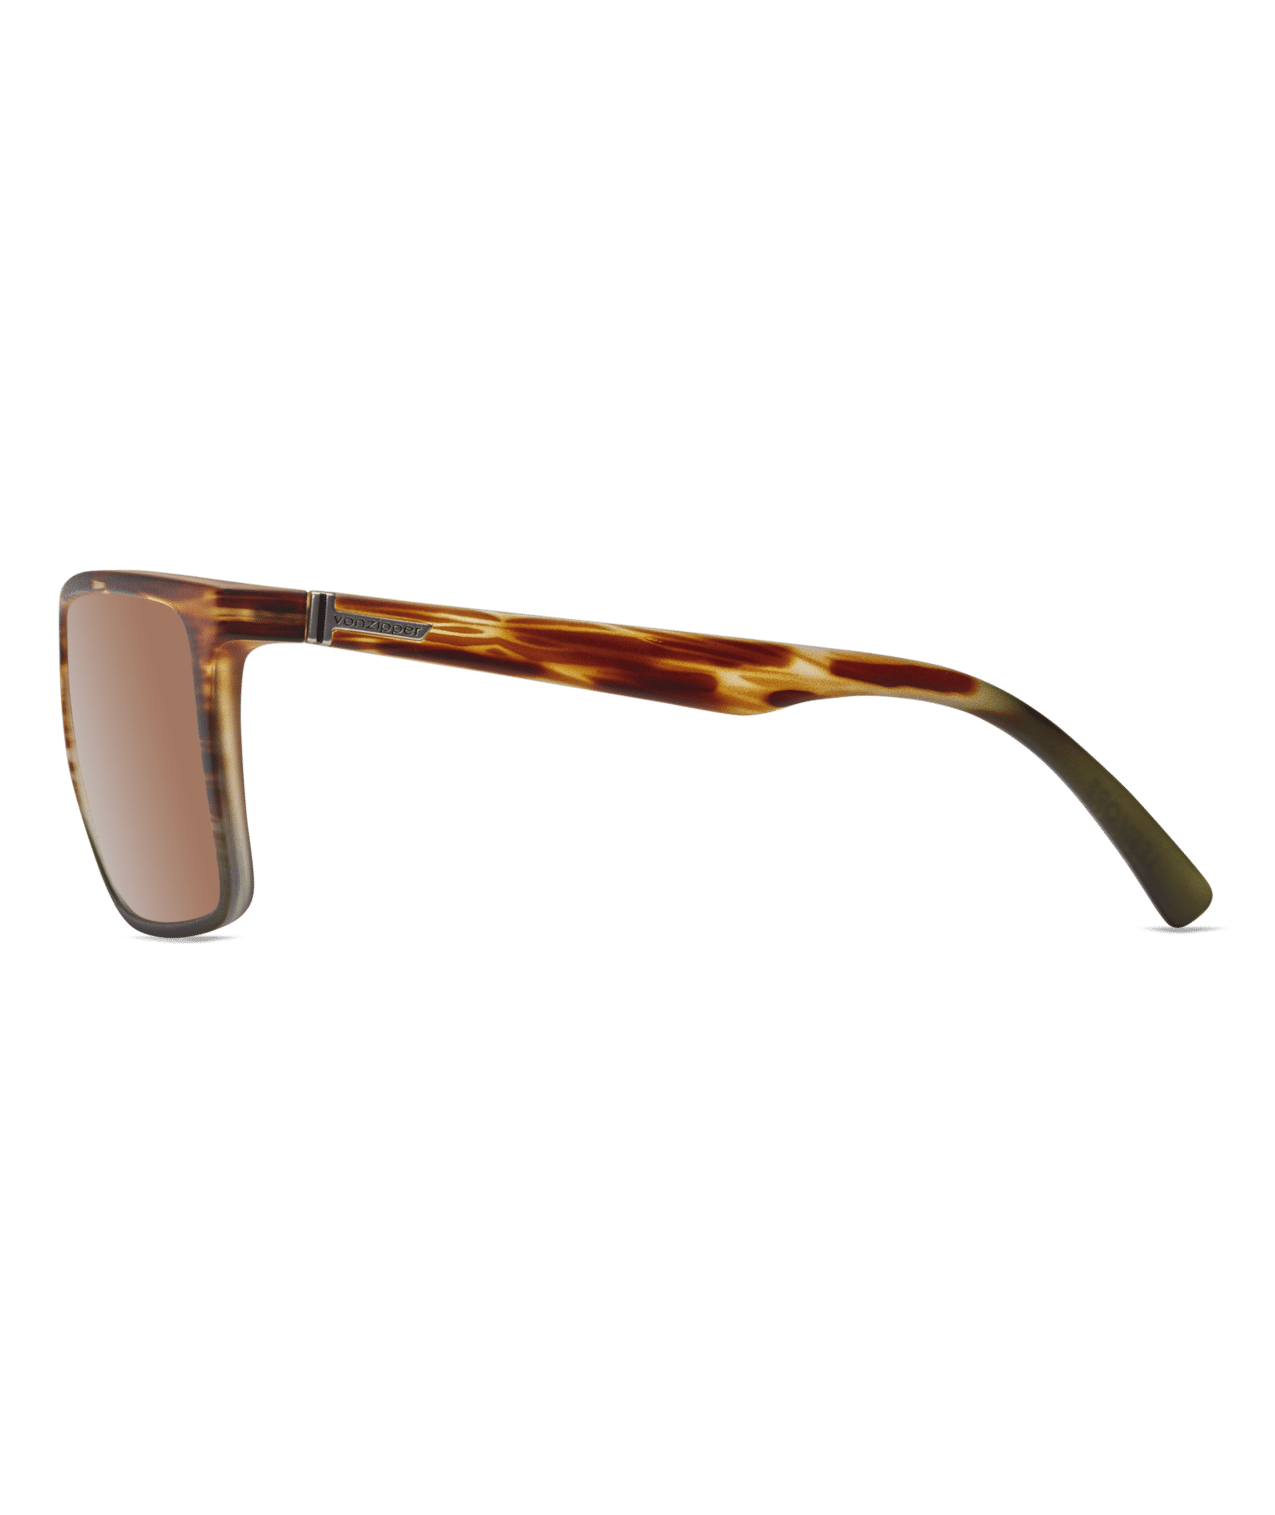 Von Zipper Sunglasses - LESMORE POLAR